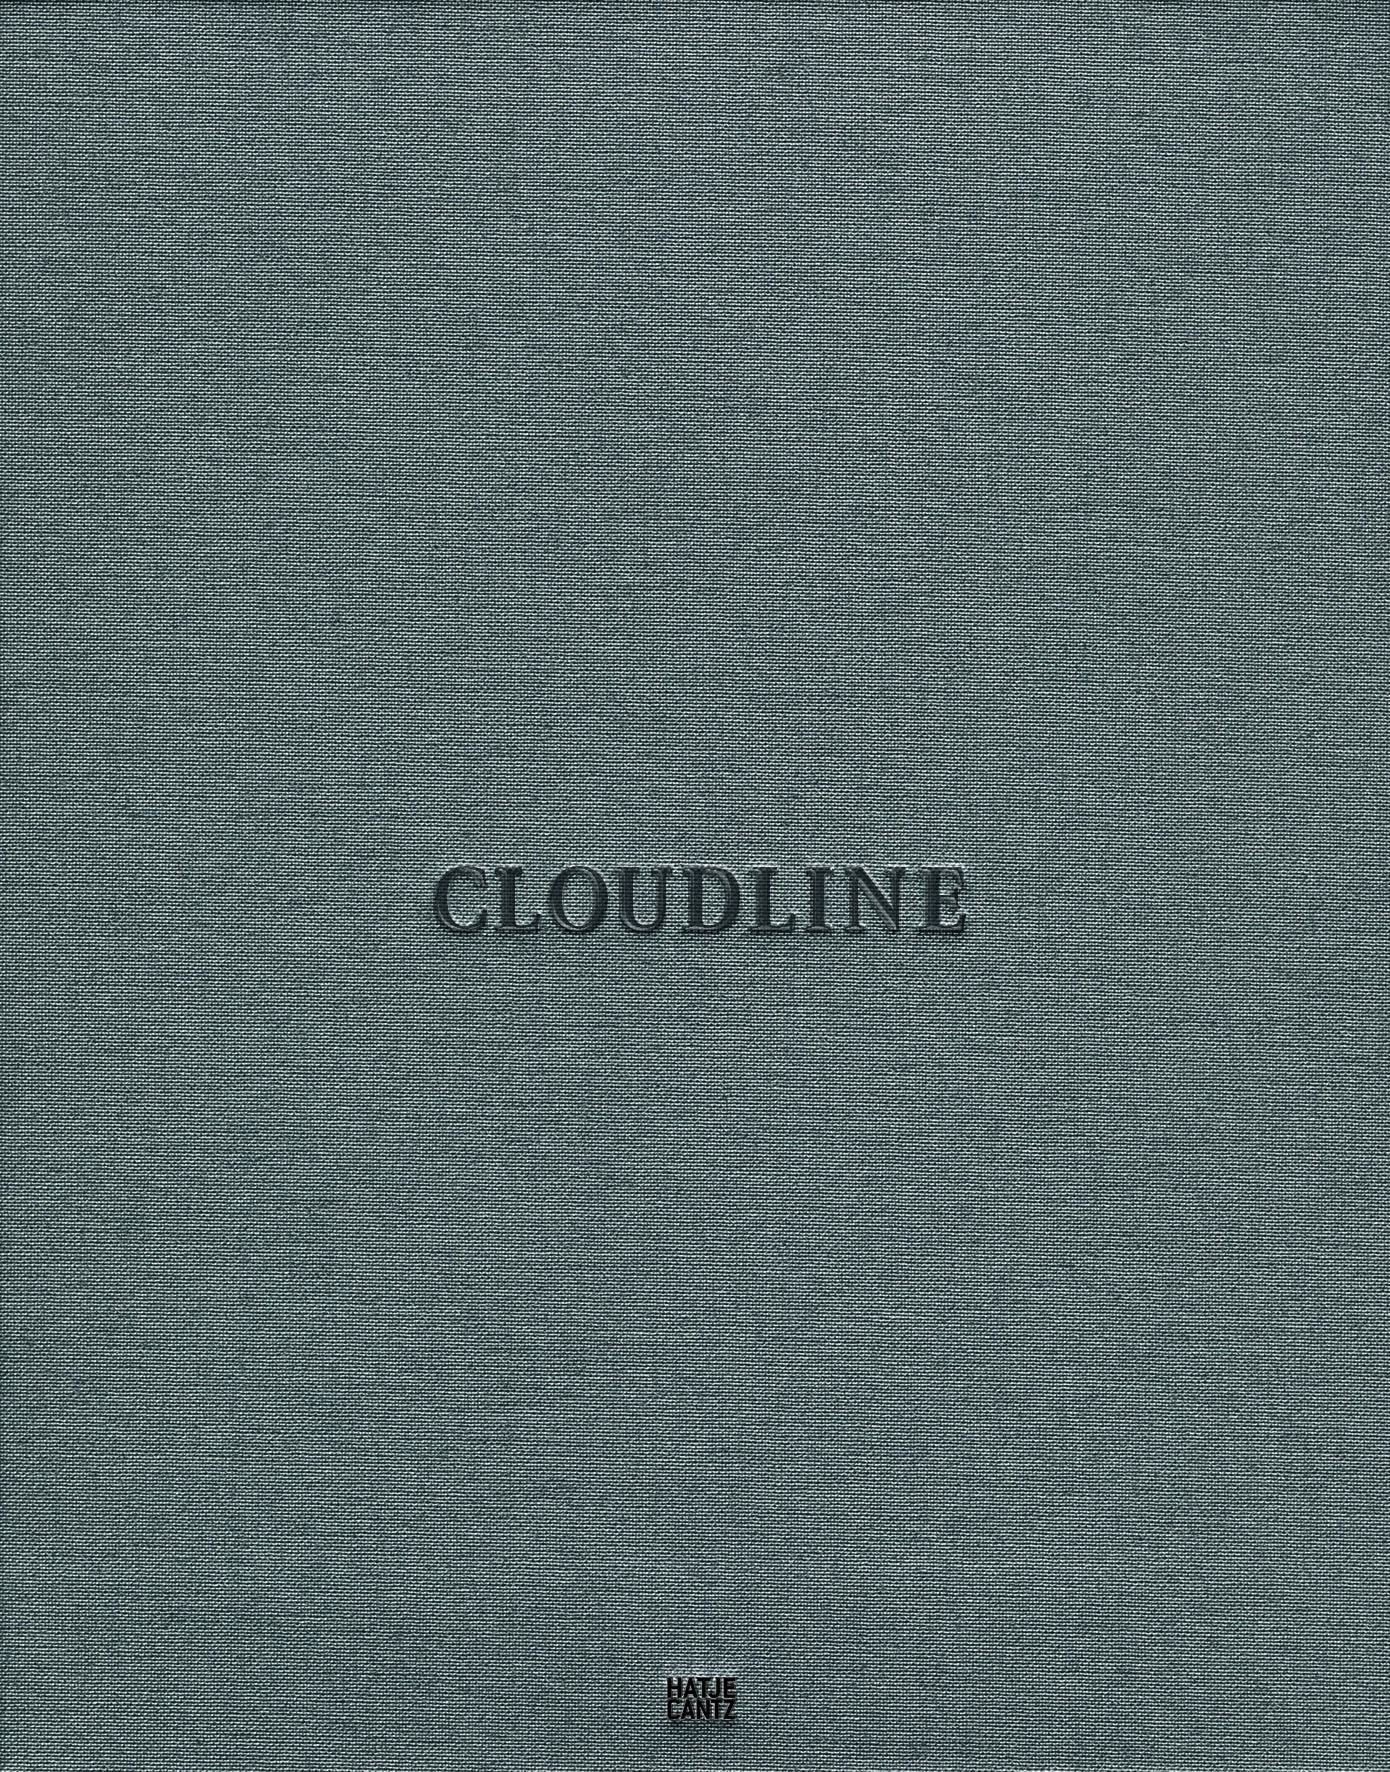 Cloudline: A House by Toshiko Mori